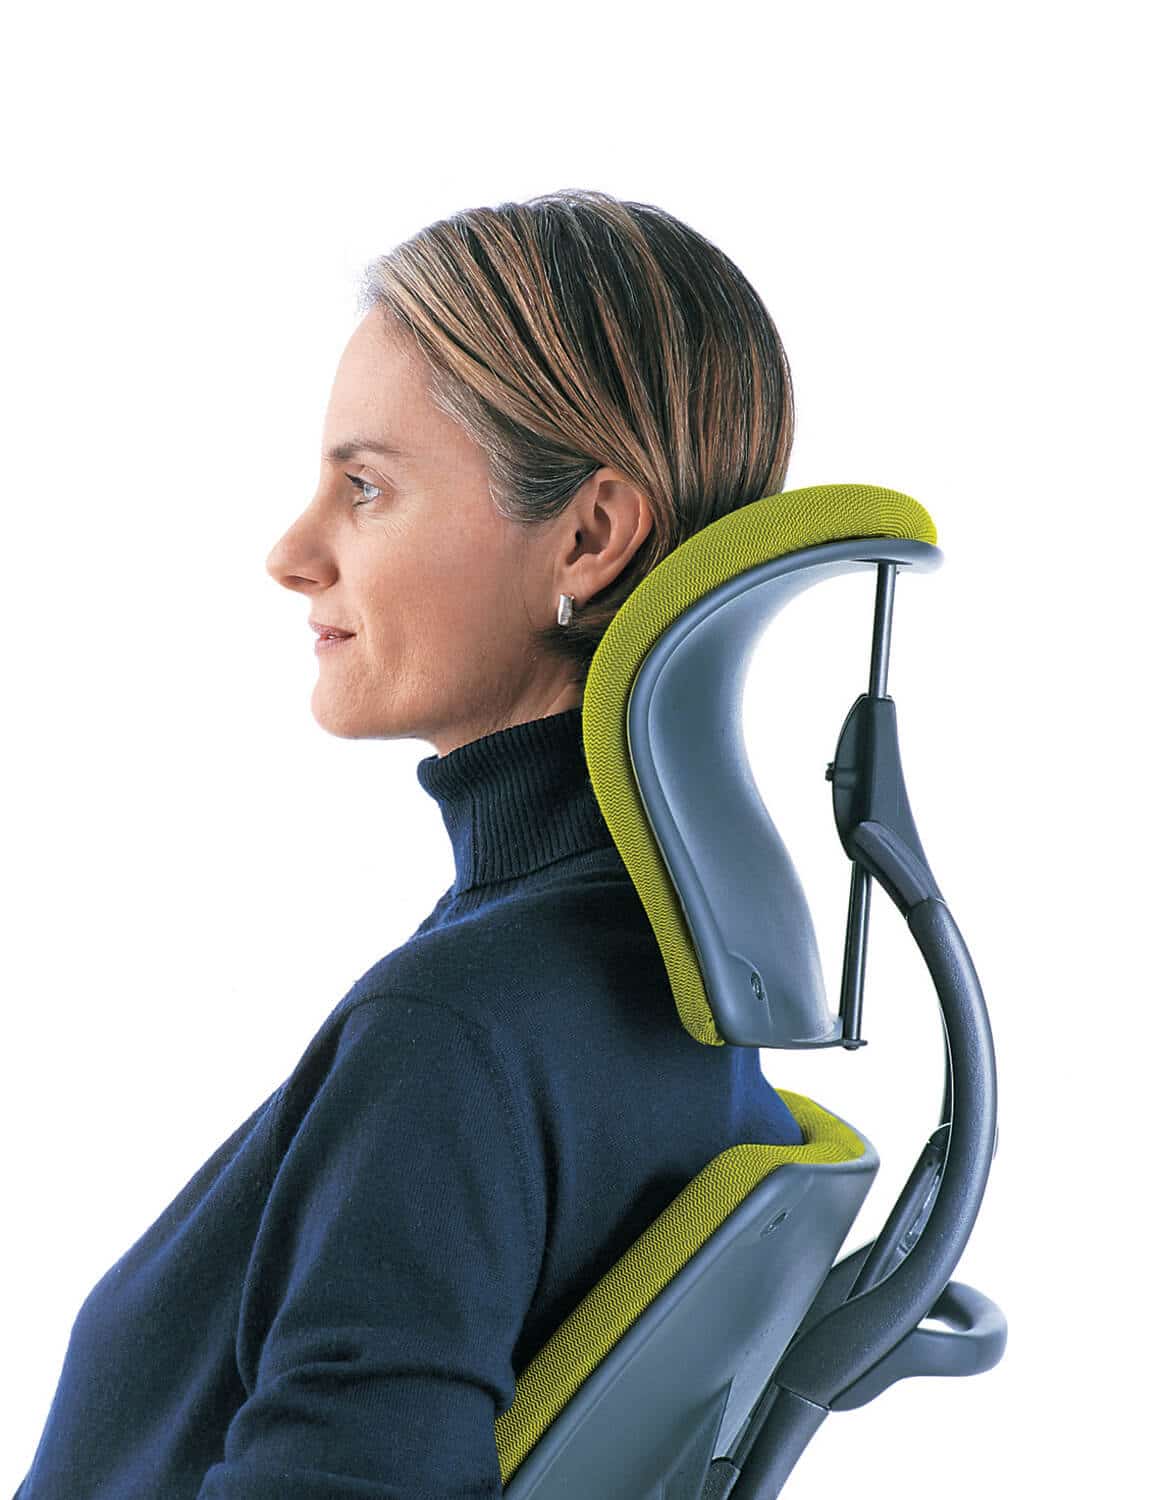 https://ergonomicchaircentral.com/wp-content/uploads/2012/11/Humanscale-Chair-Ergonomic-Chair-Central.jpg